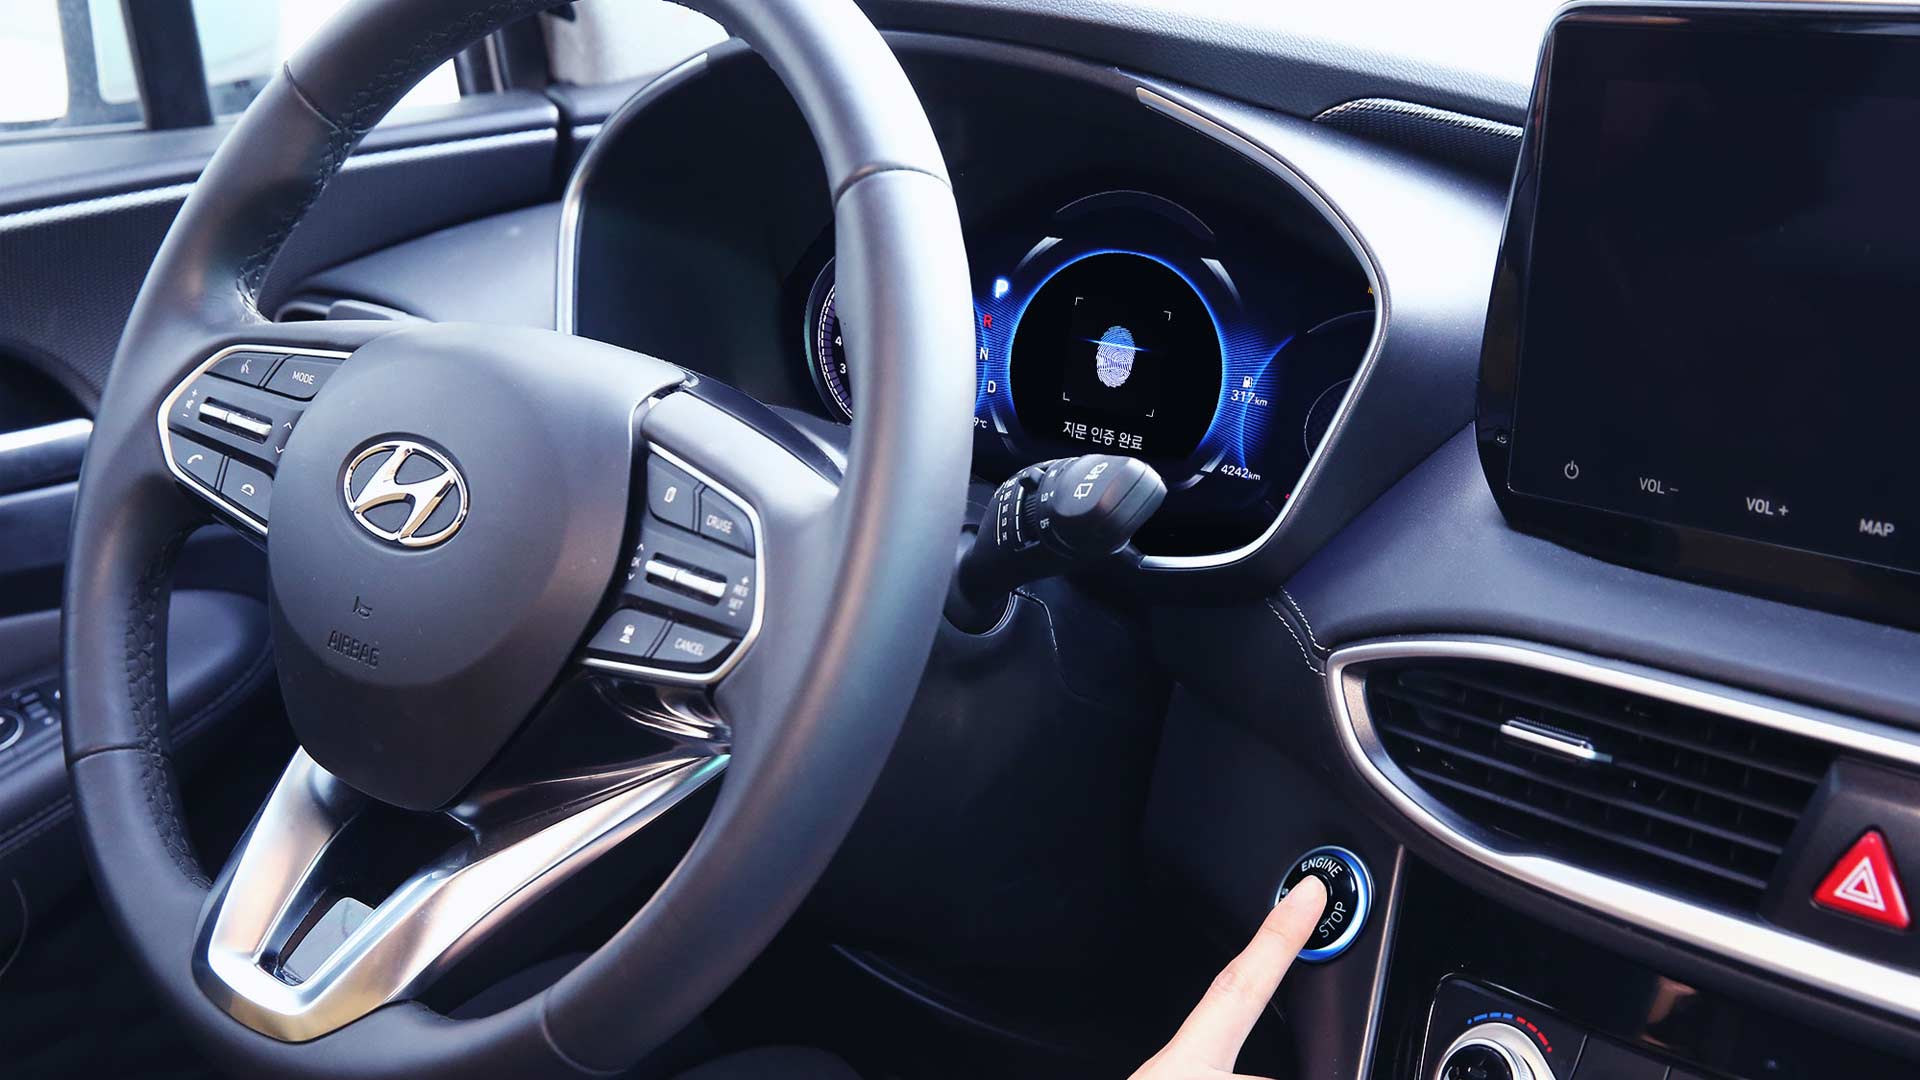 Hyundai-fingerprint-technology-vehicles